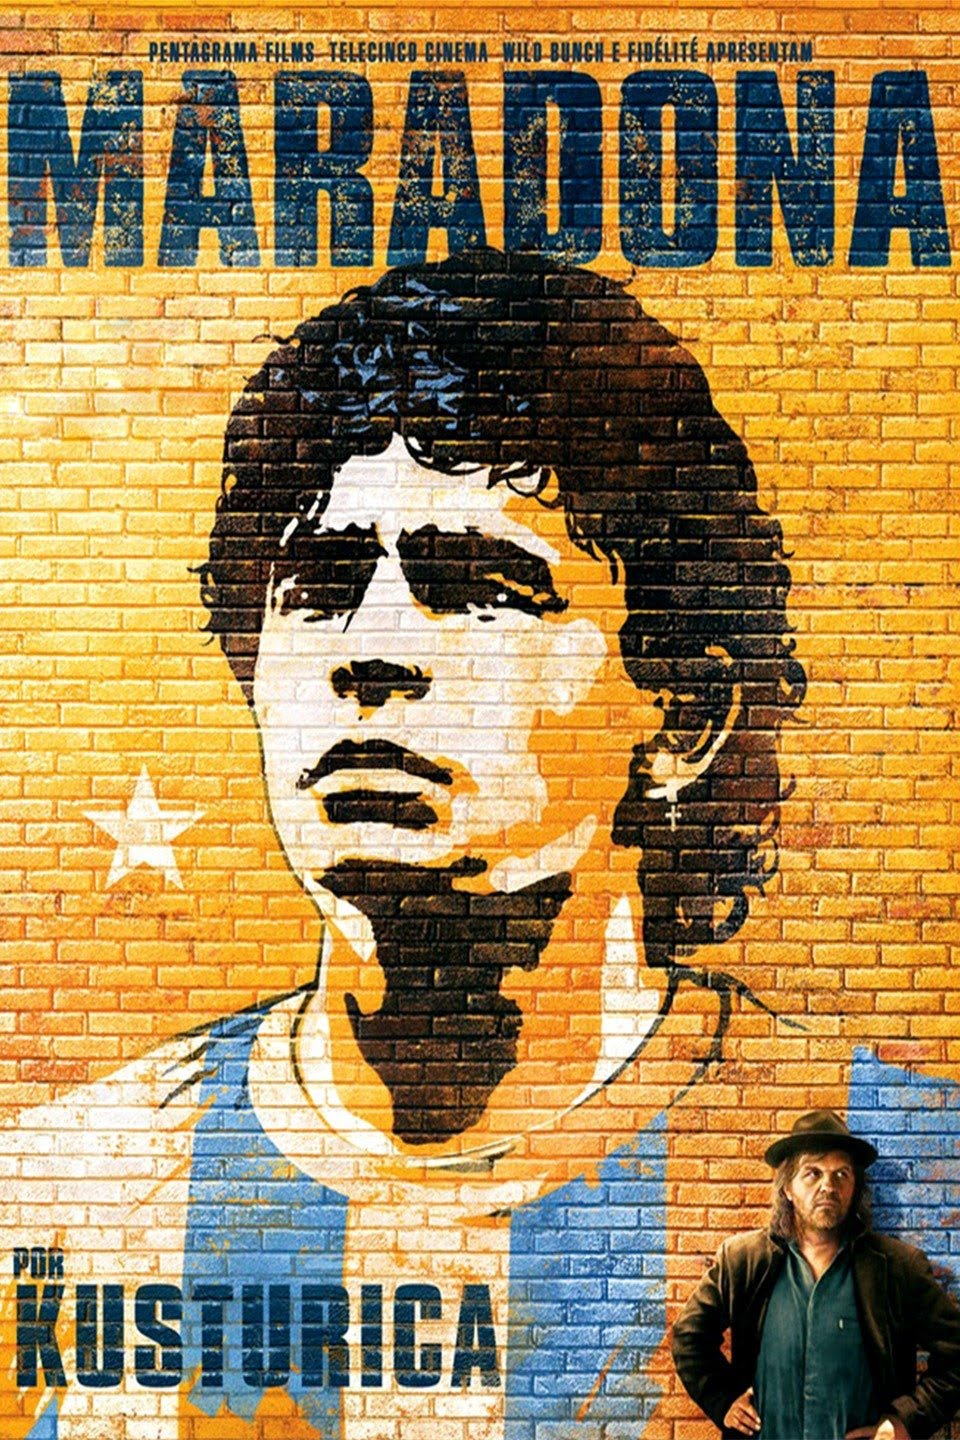 Cartel del largometraje "Maradona"